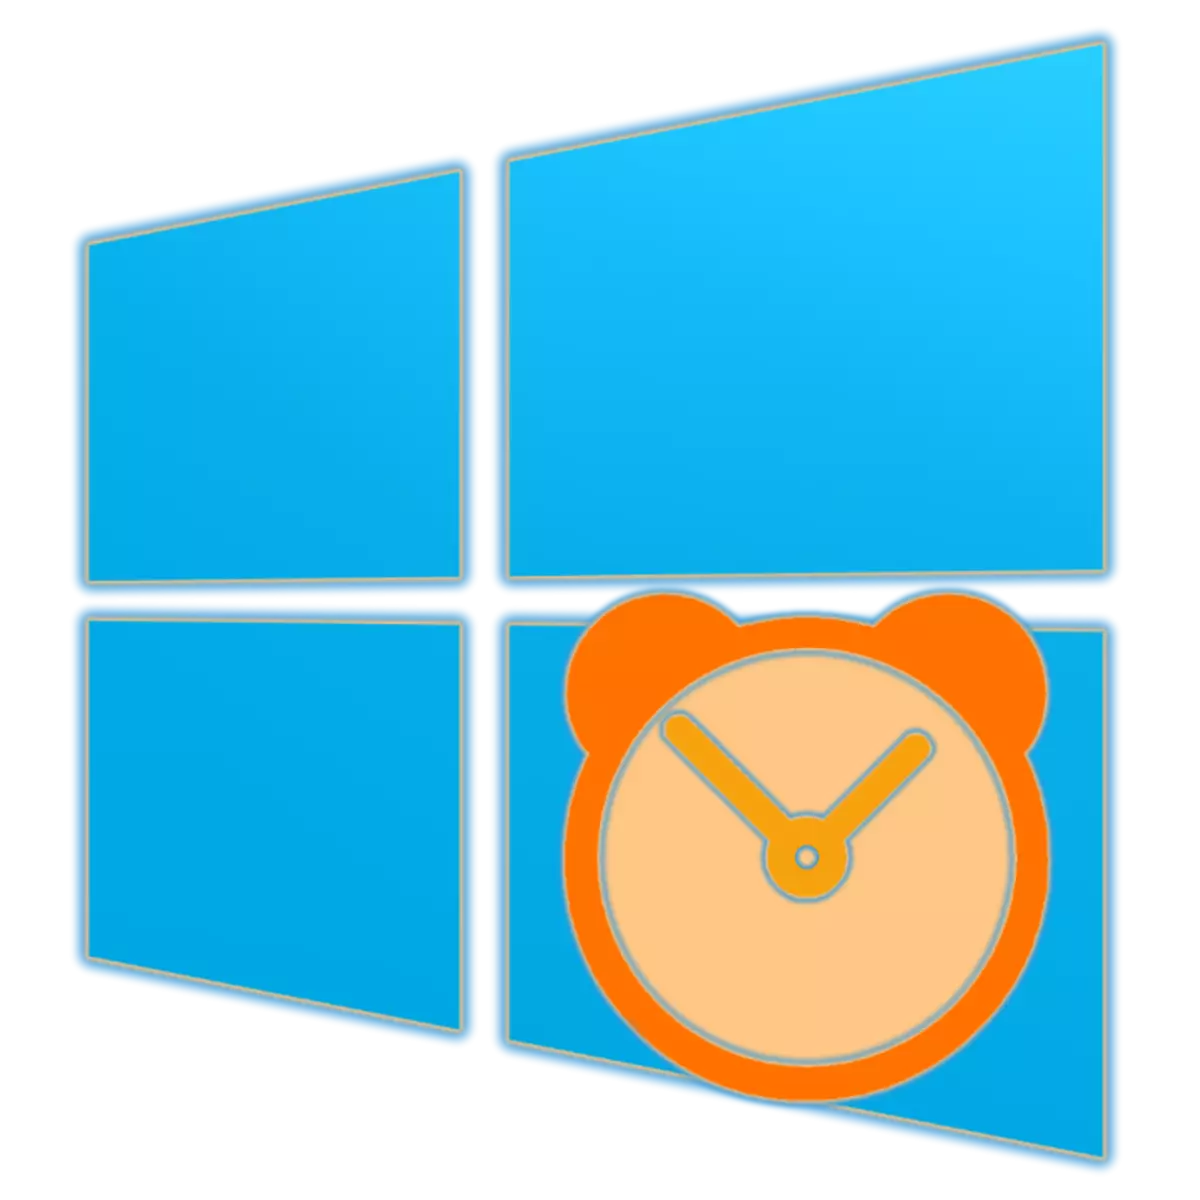 Windows 10 နှင့်ကွန်ပျူတာပေါ်တွင်နှိုးစက်နာရီကိုမည်သို့ထားရမည်နည်း